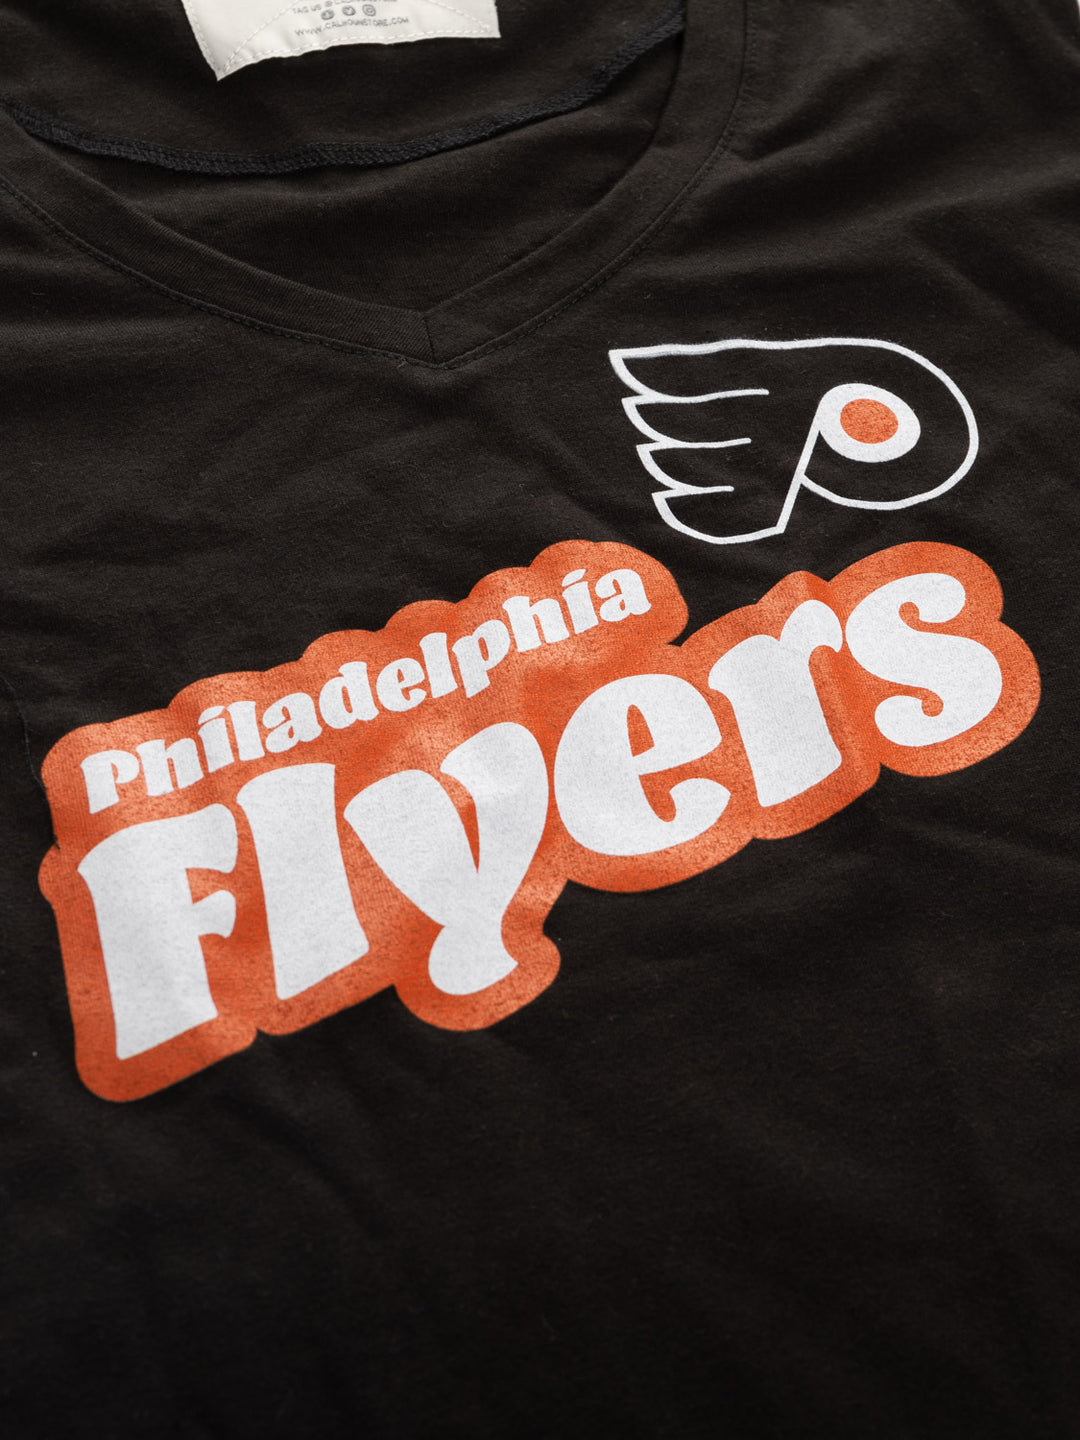 Official Licensed NHL Ladies' Retro Varsity Short Sleeve Vneck Tshirt--Philadelphia Flyers